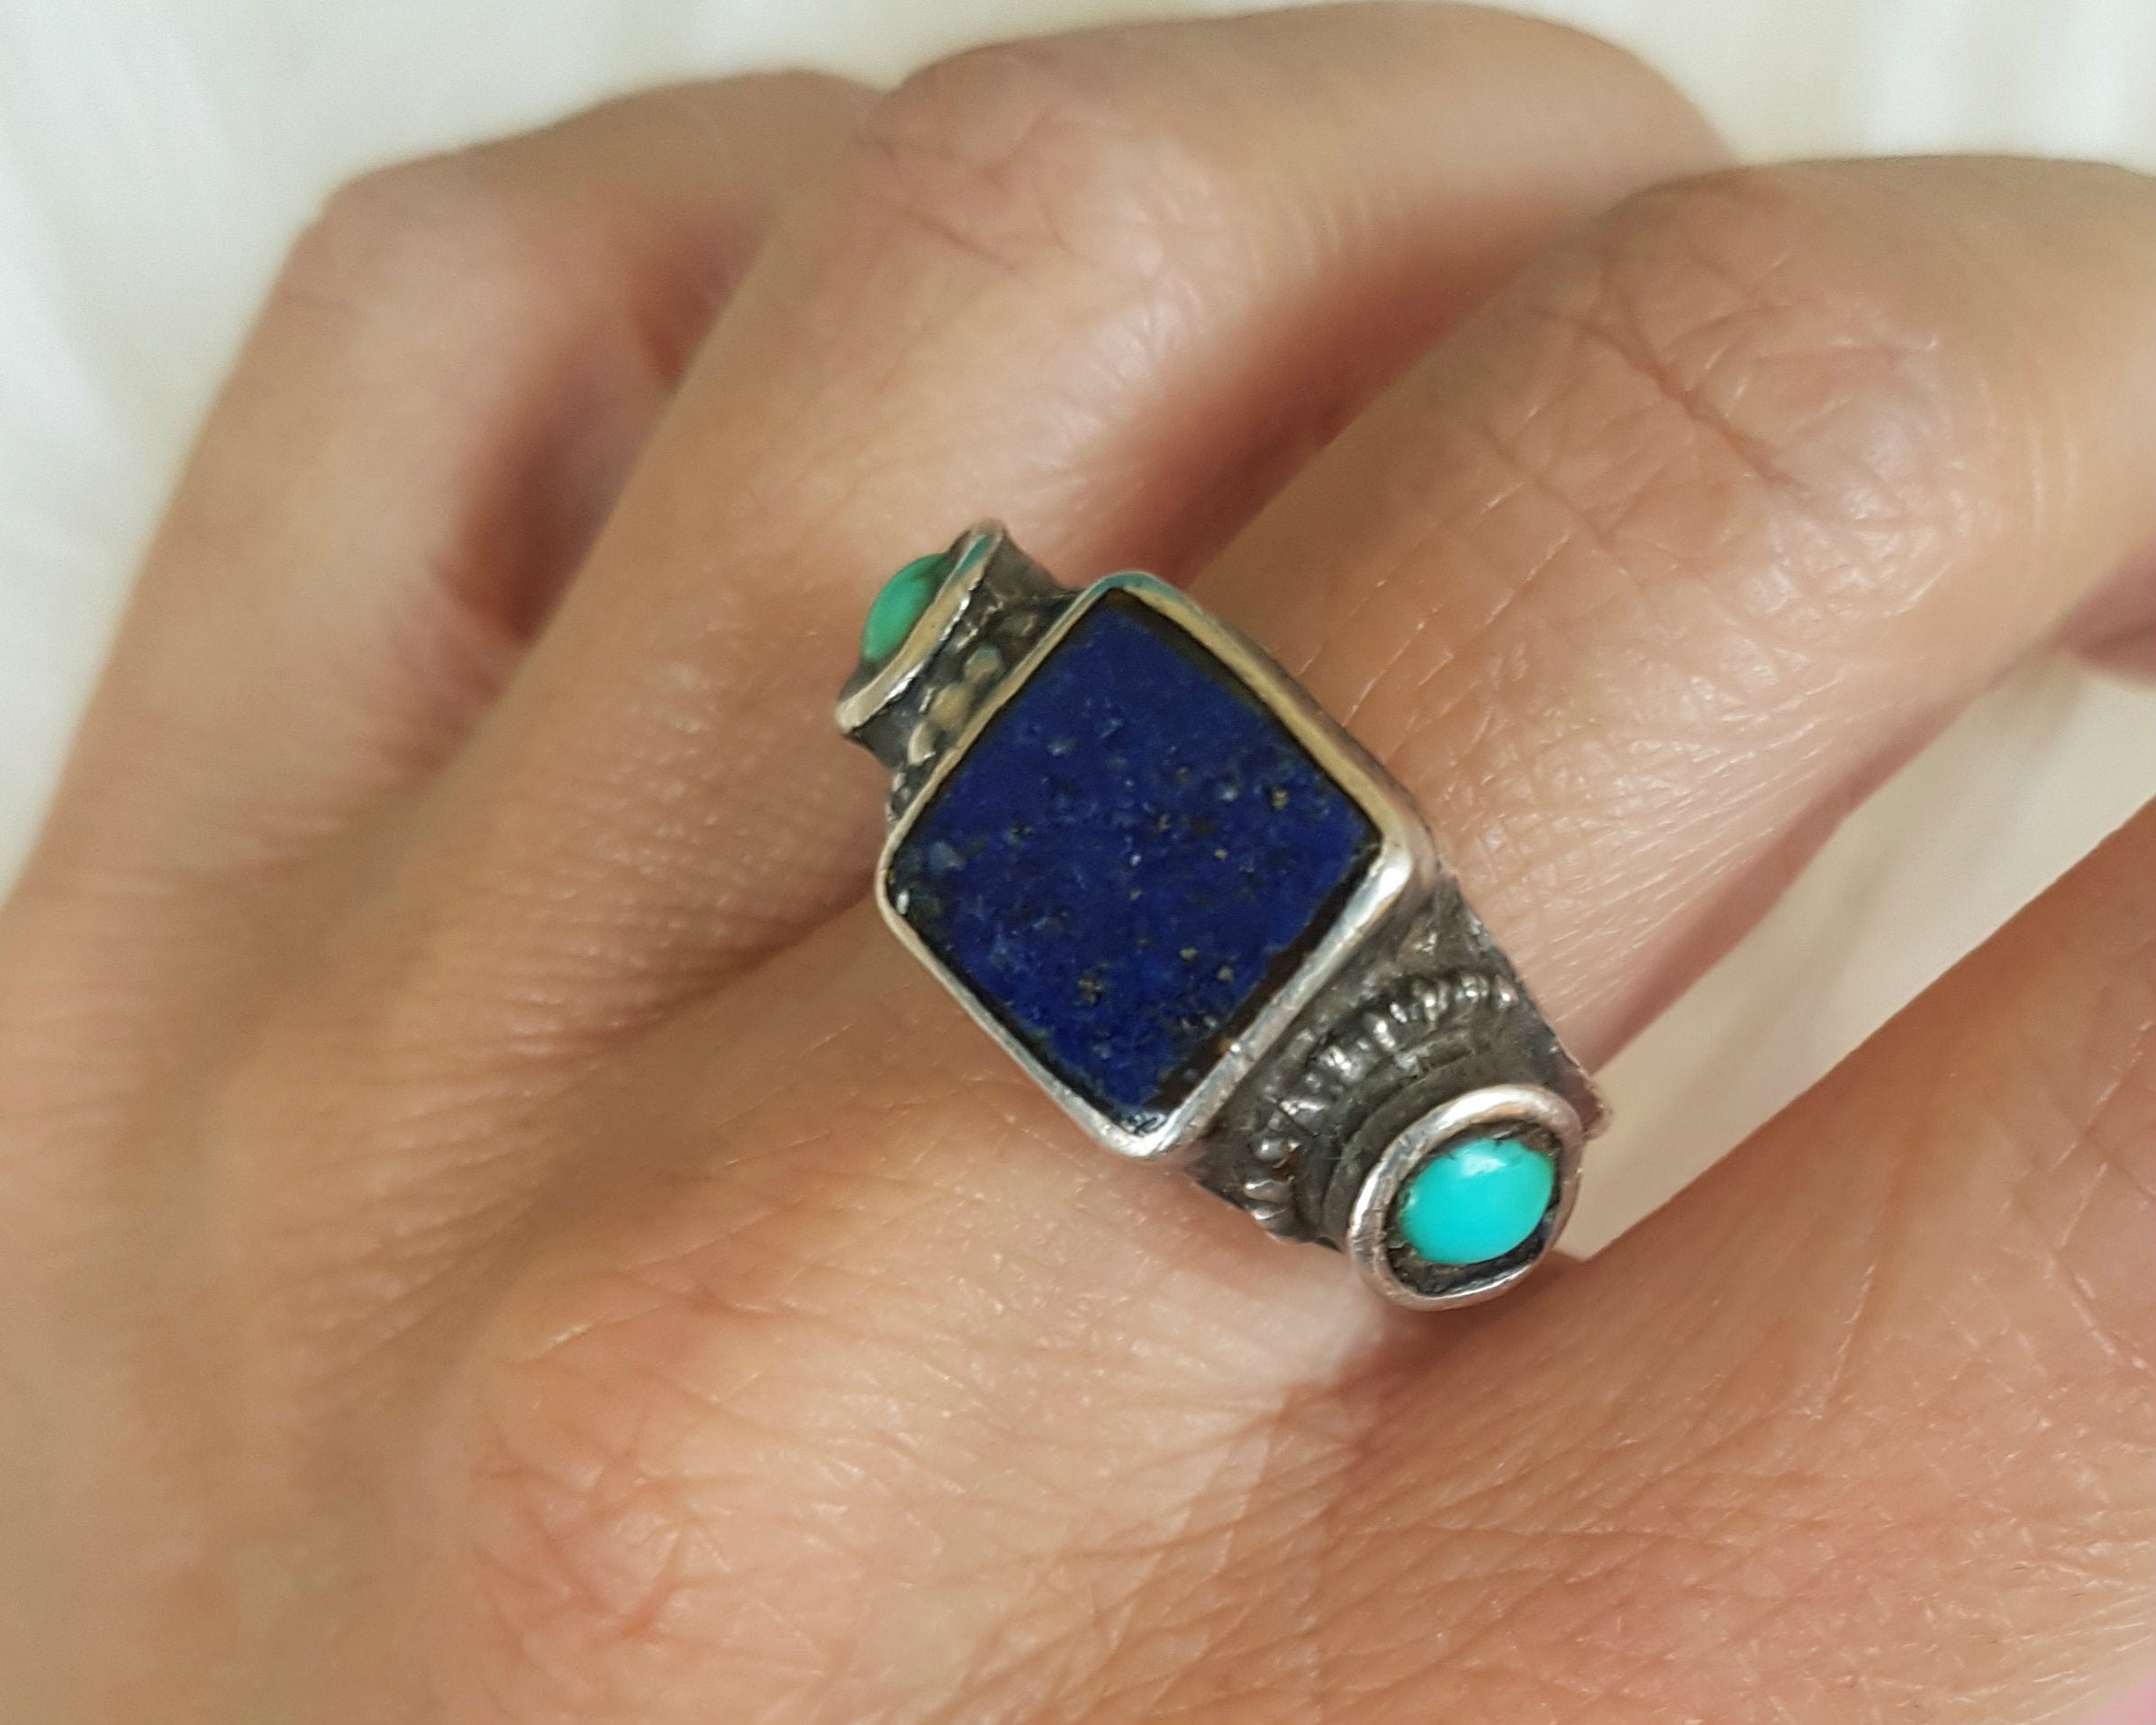 Tibetan Turquoise and Lapis Lazuli Ring - Size 7.75 / 8